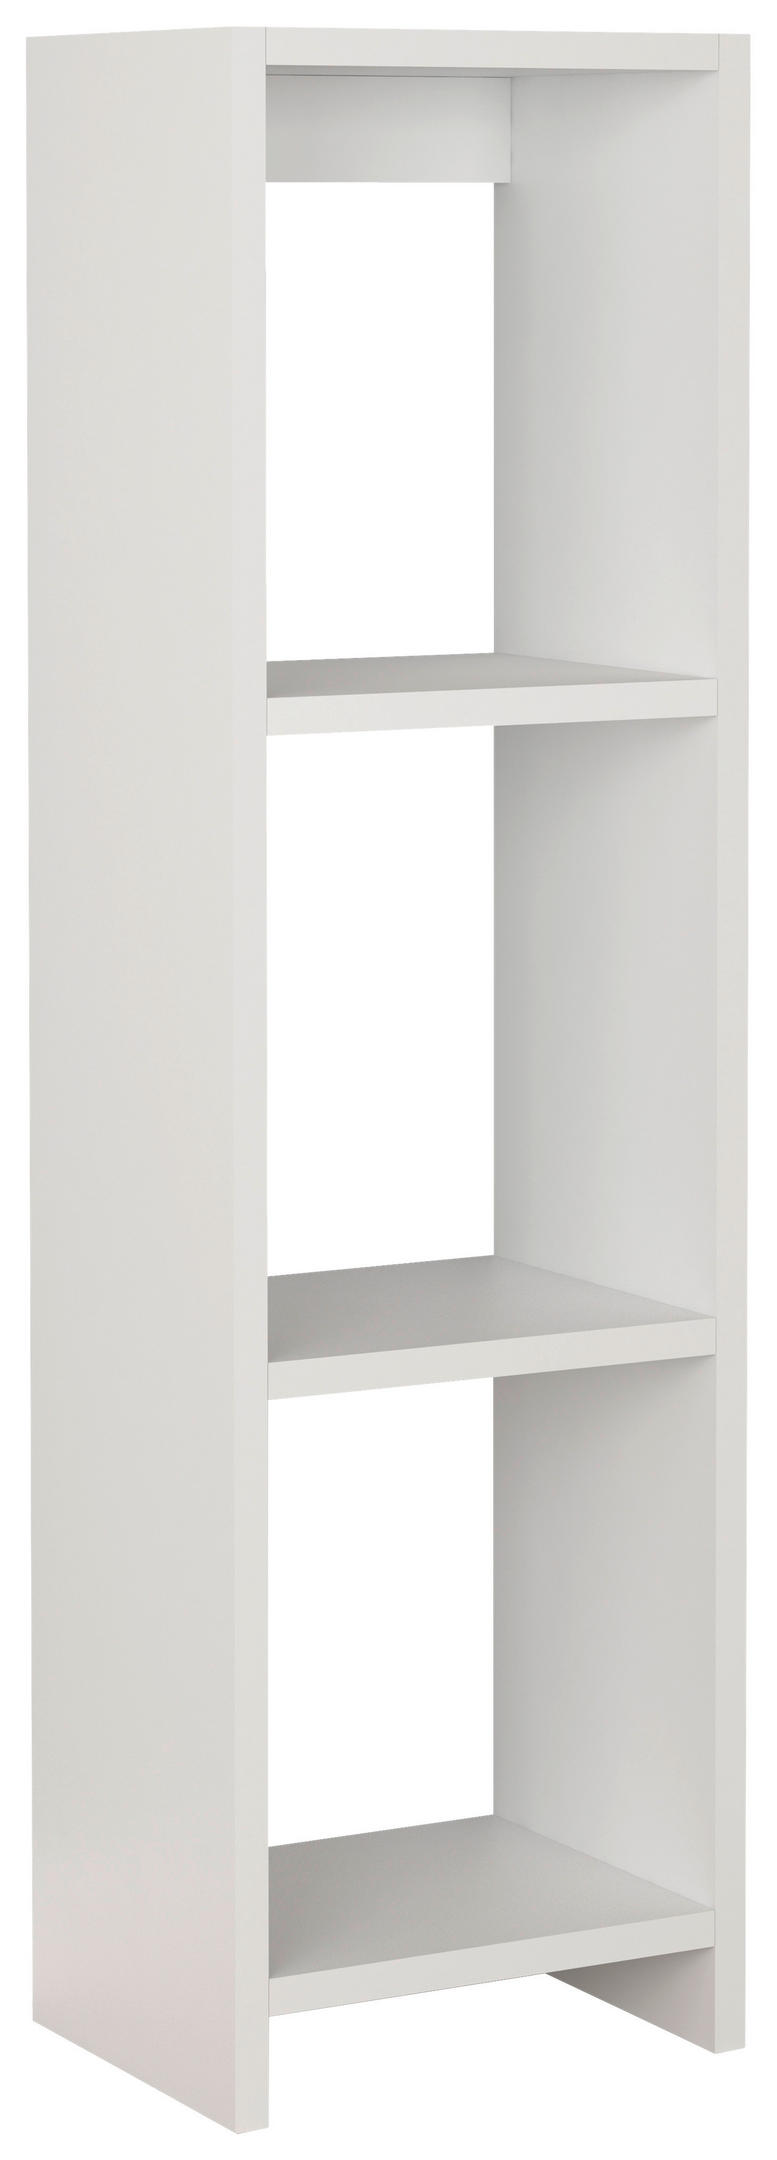 REGAL Weiß  - Weiß, MODERN, Holzwerkstoff (29/100/22cm) - MID.YOU